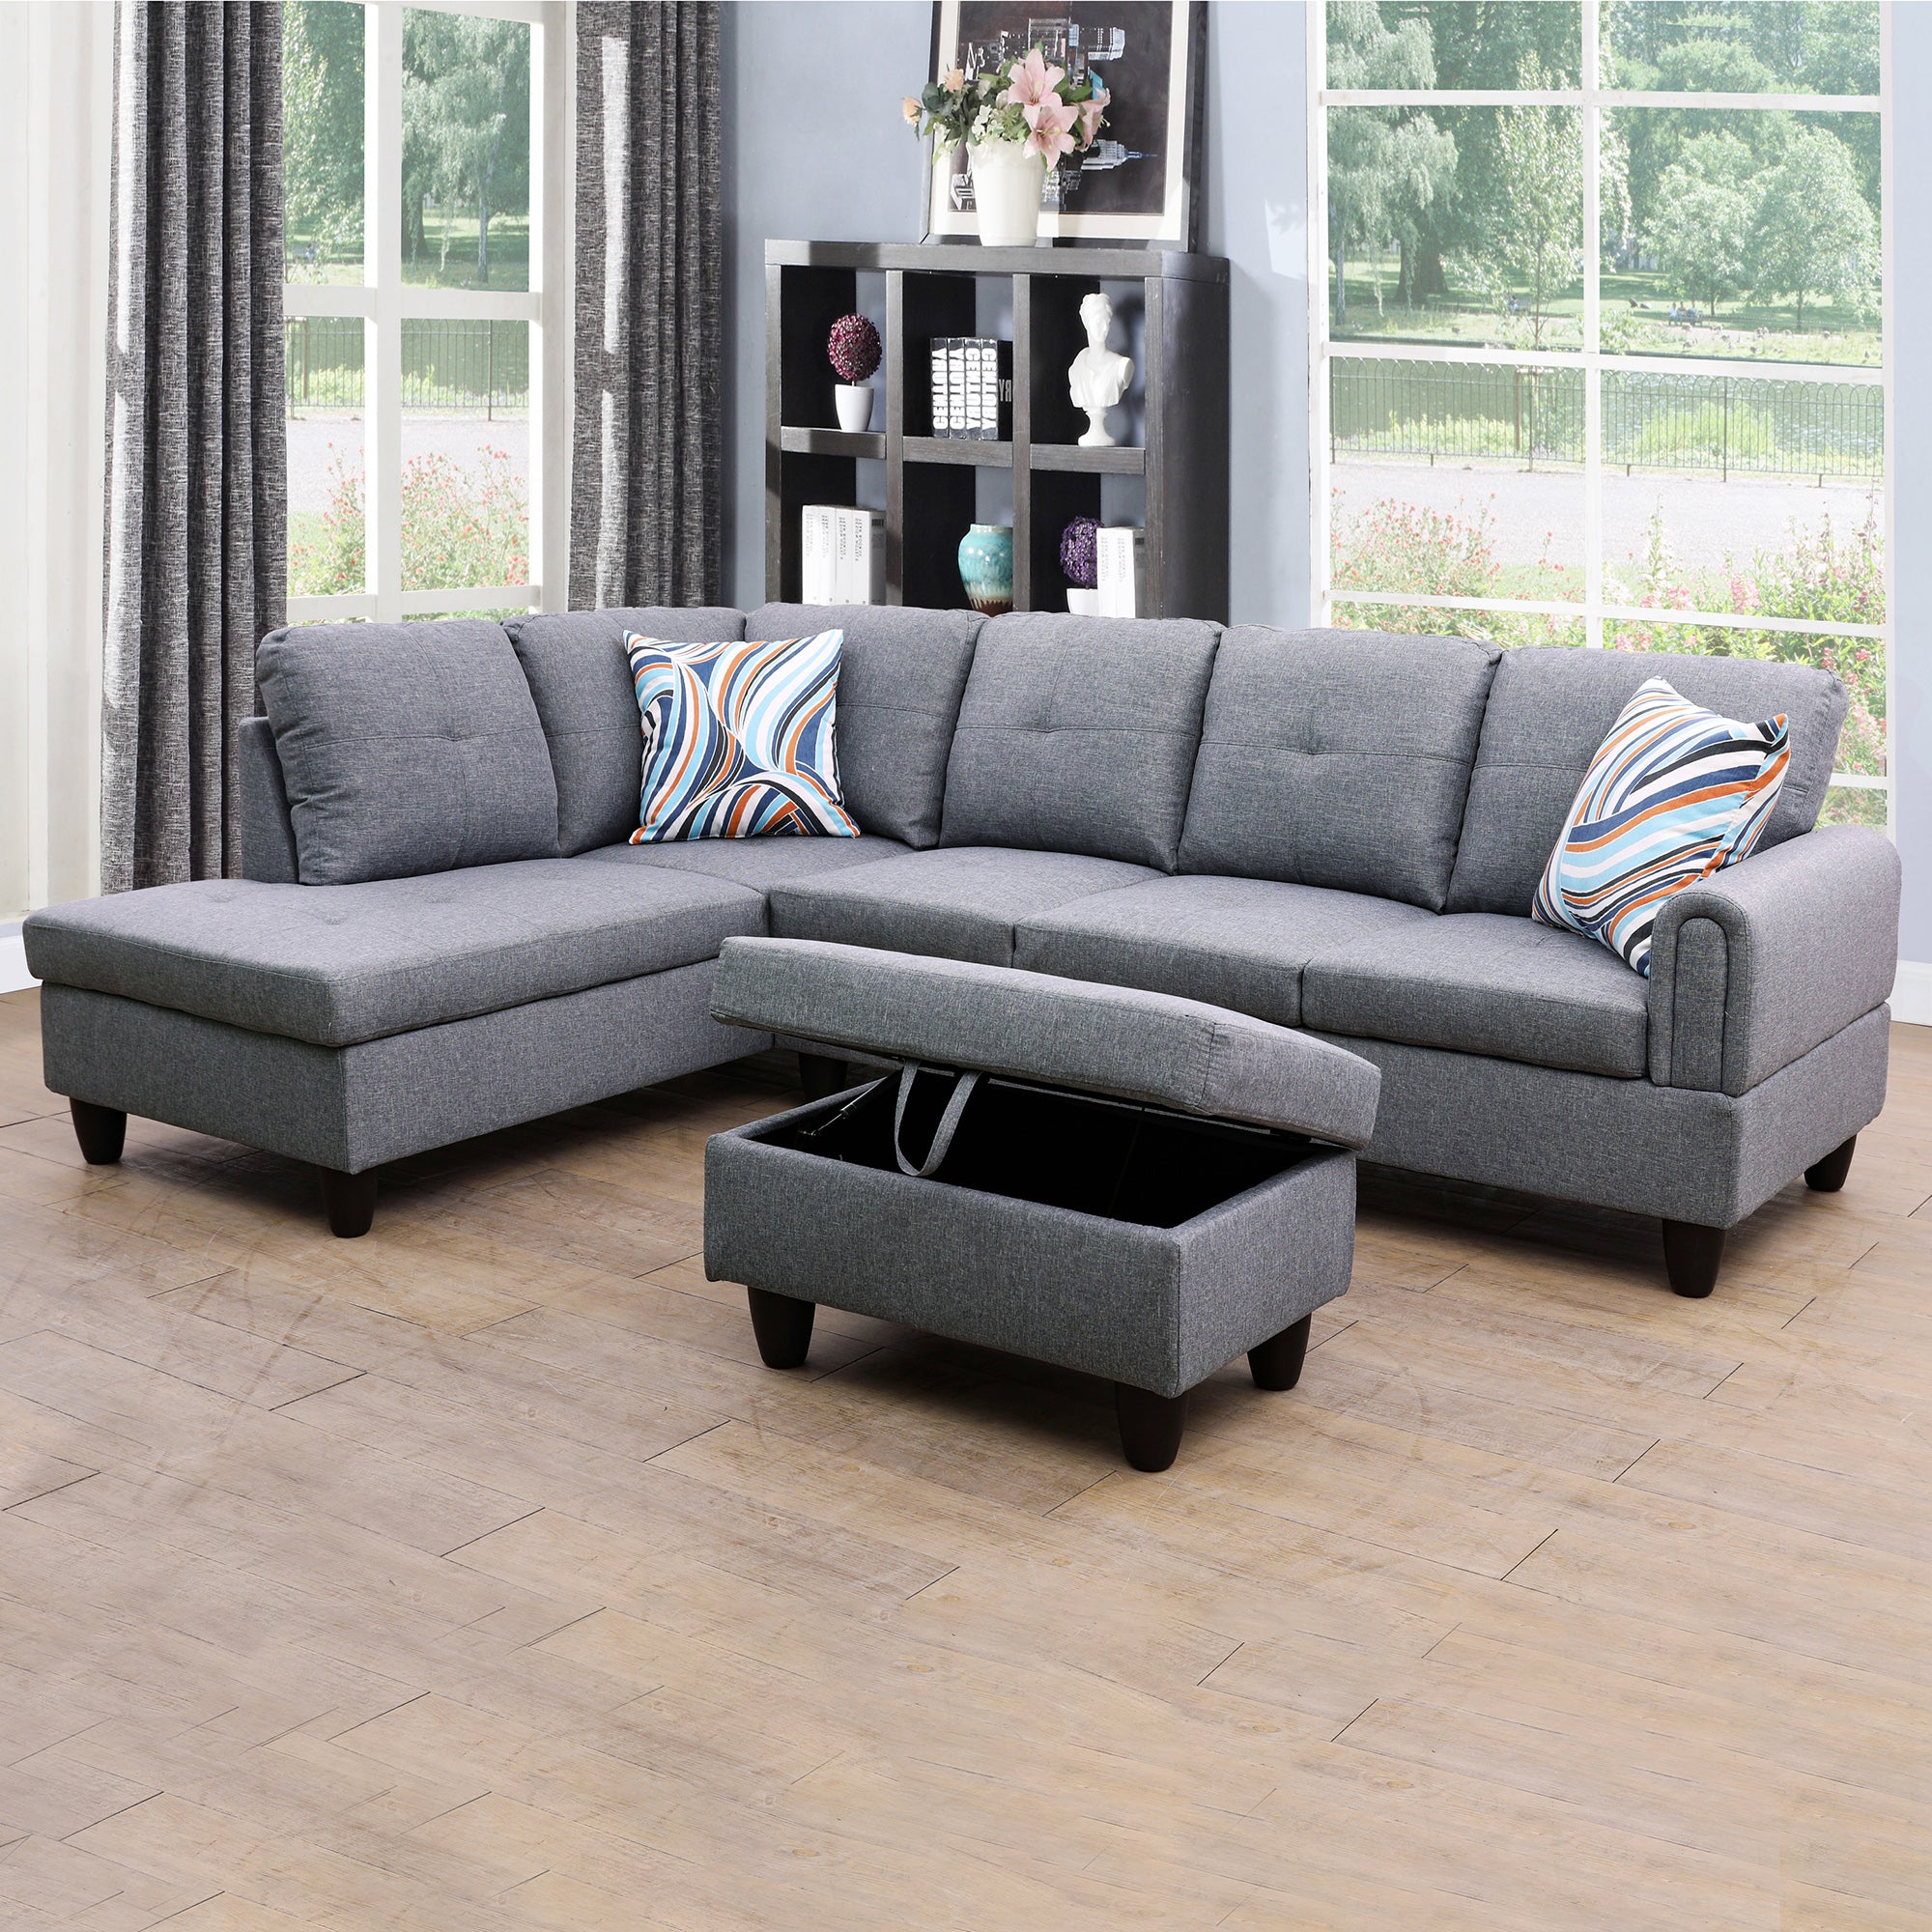 Ainehome Grey L-shaped Linen Sofa Set